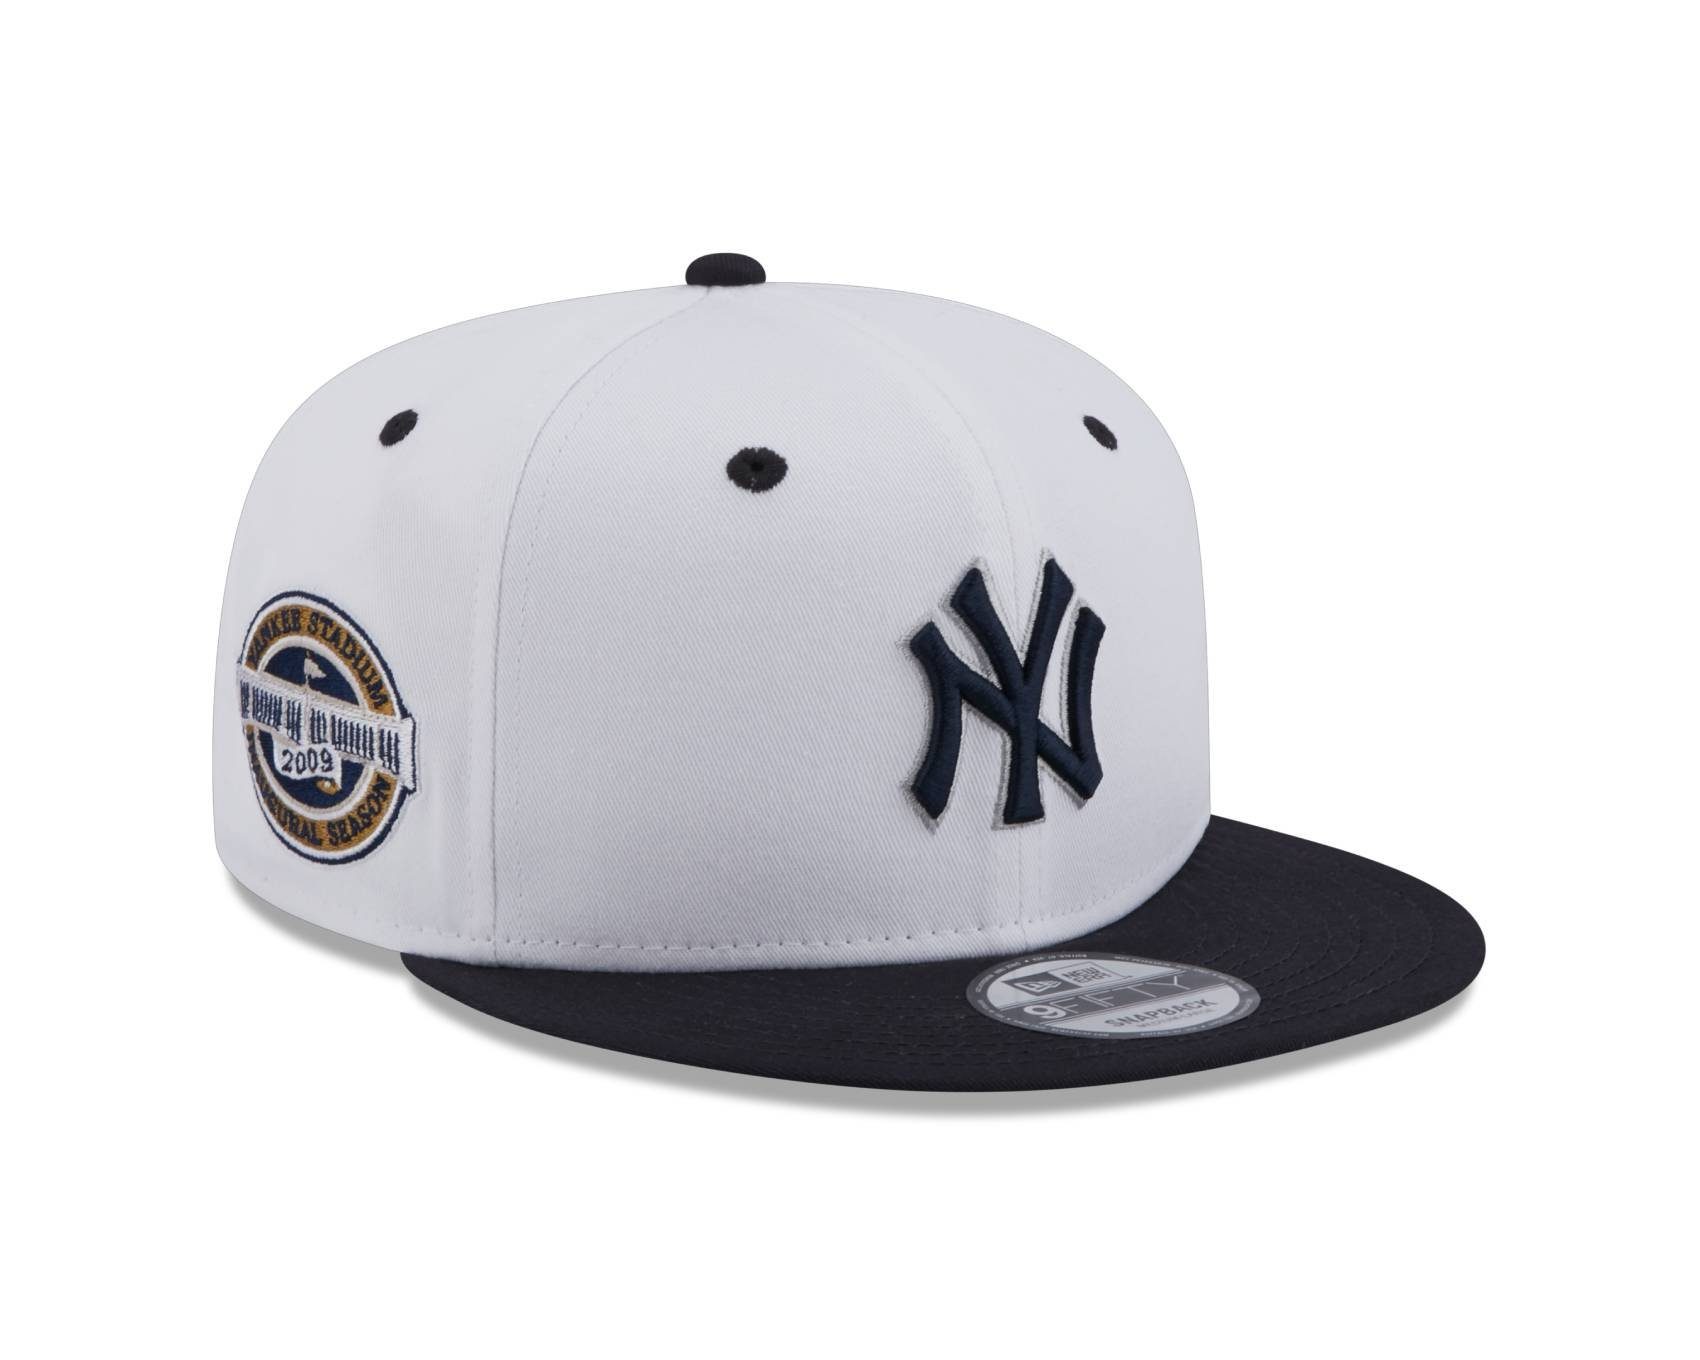 New Cap Era Yankees White Era 9Fifty New (1-St) New Cap Crown Baseball York